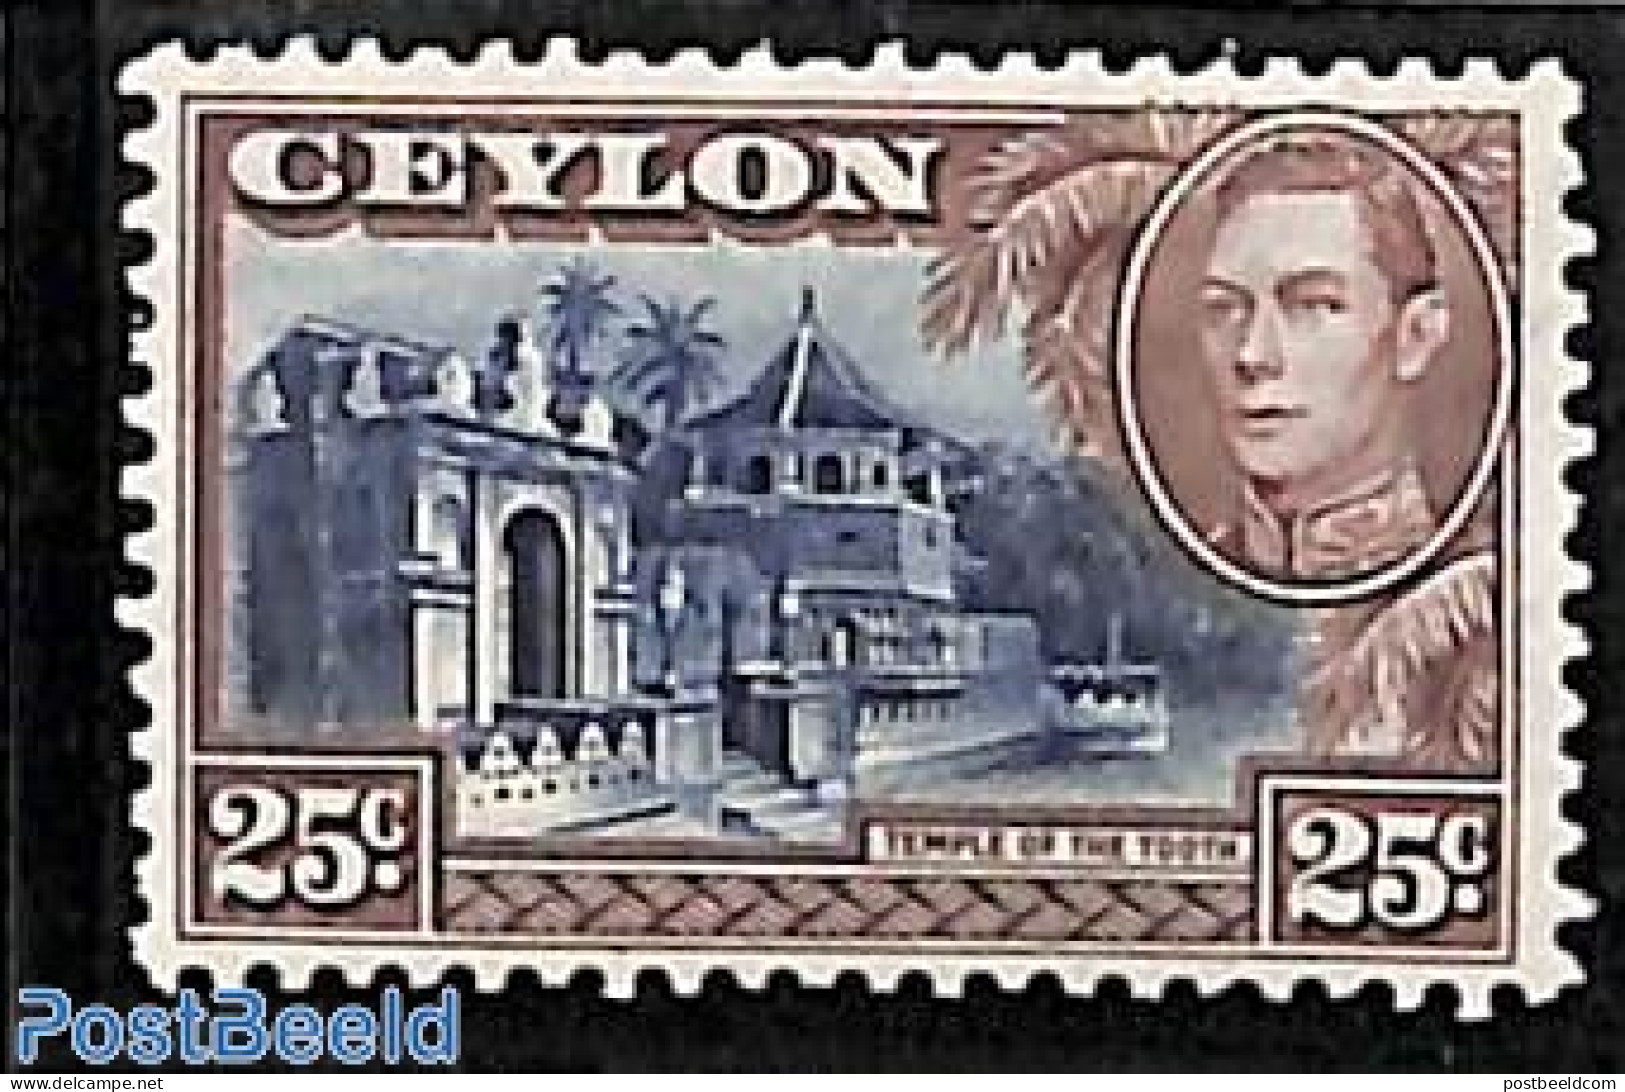 Sri Lanka (Ceylon) 1938 25c, WM Sidewards, Stamp Out Of Set, Mint NH - Sri Lanka (Ceylon) (1948-...)